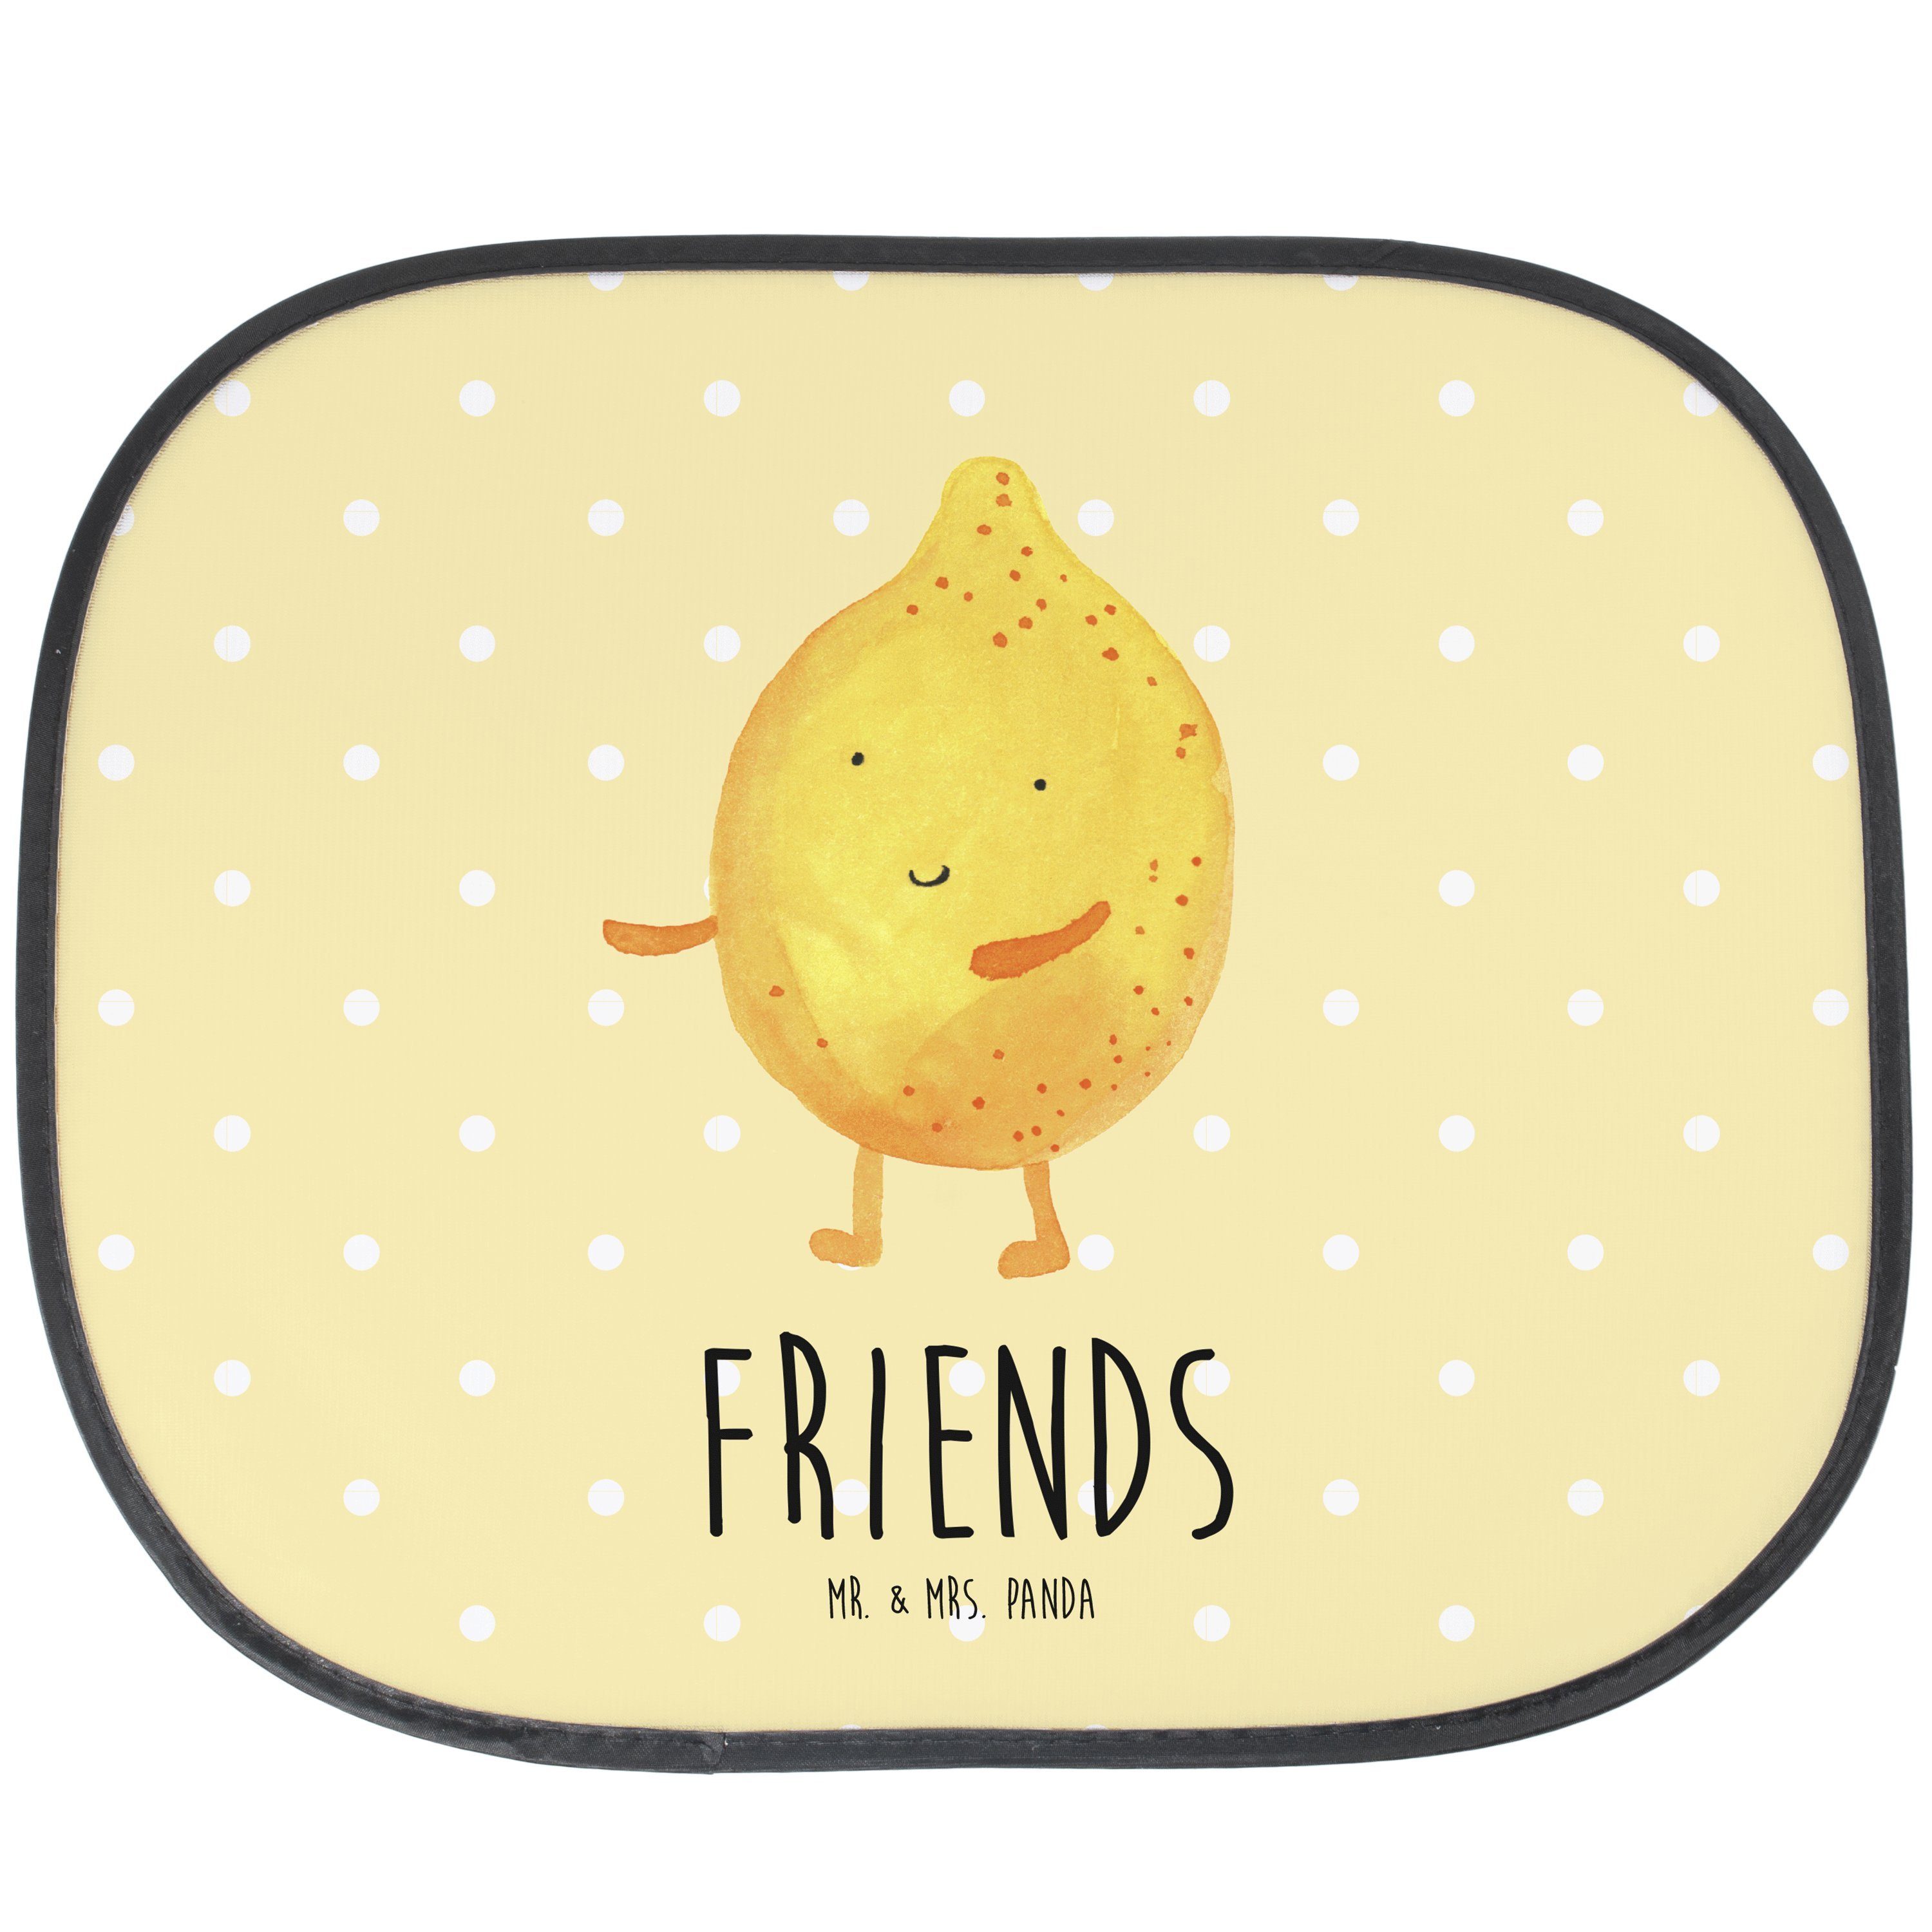 Sonnenschutz BestFriends-Lemon - Gelb Pastell - Geschenk, Sonne, Sonnenschutz Kind, Mr. & Mrs. Panda, Seidenmatt | Fensterfolien